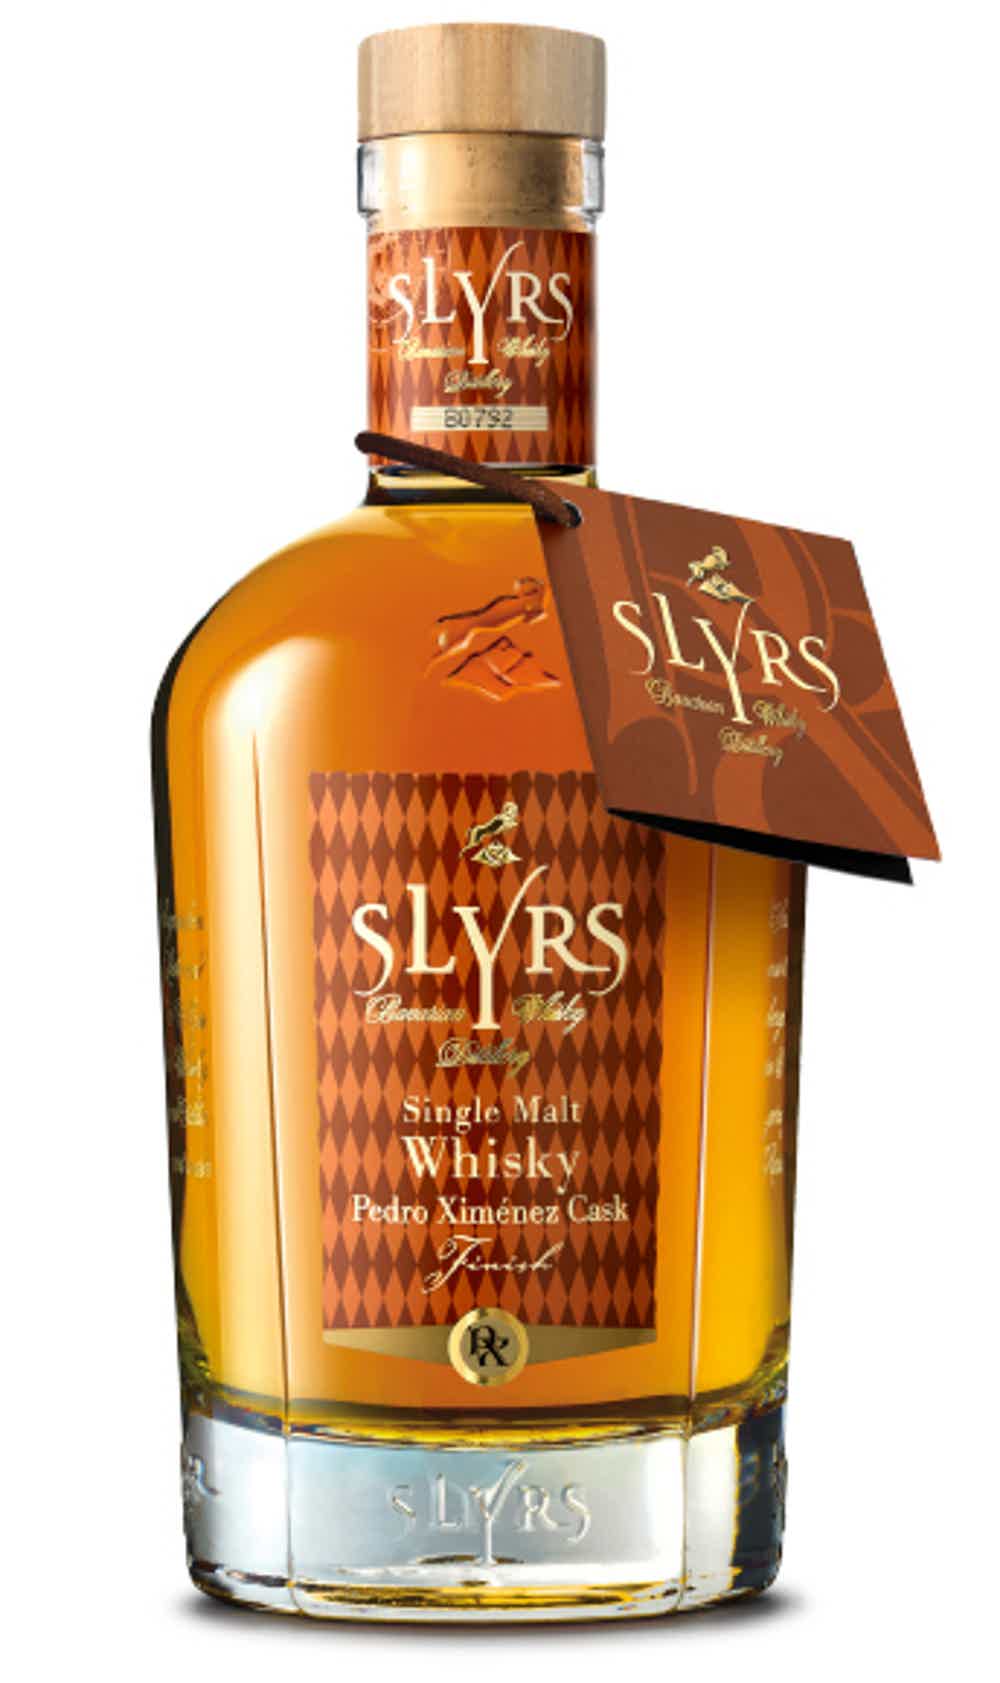 SLYRS Single Malt Whisky Pedro Ximénez Cask Finish 46% vol. 46.0% 0.35L, Spirits